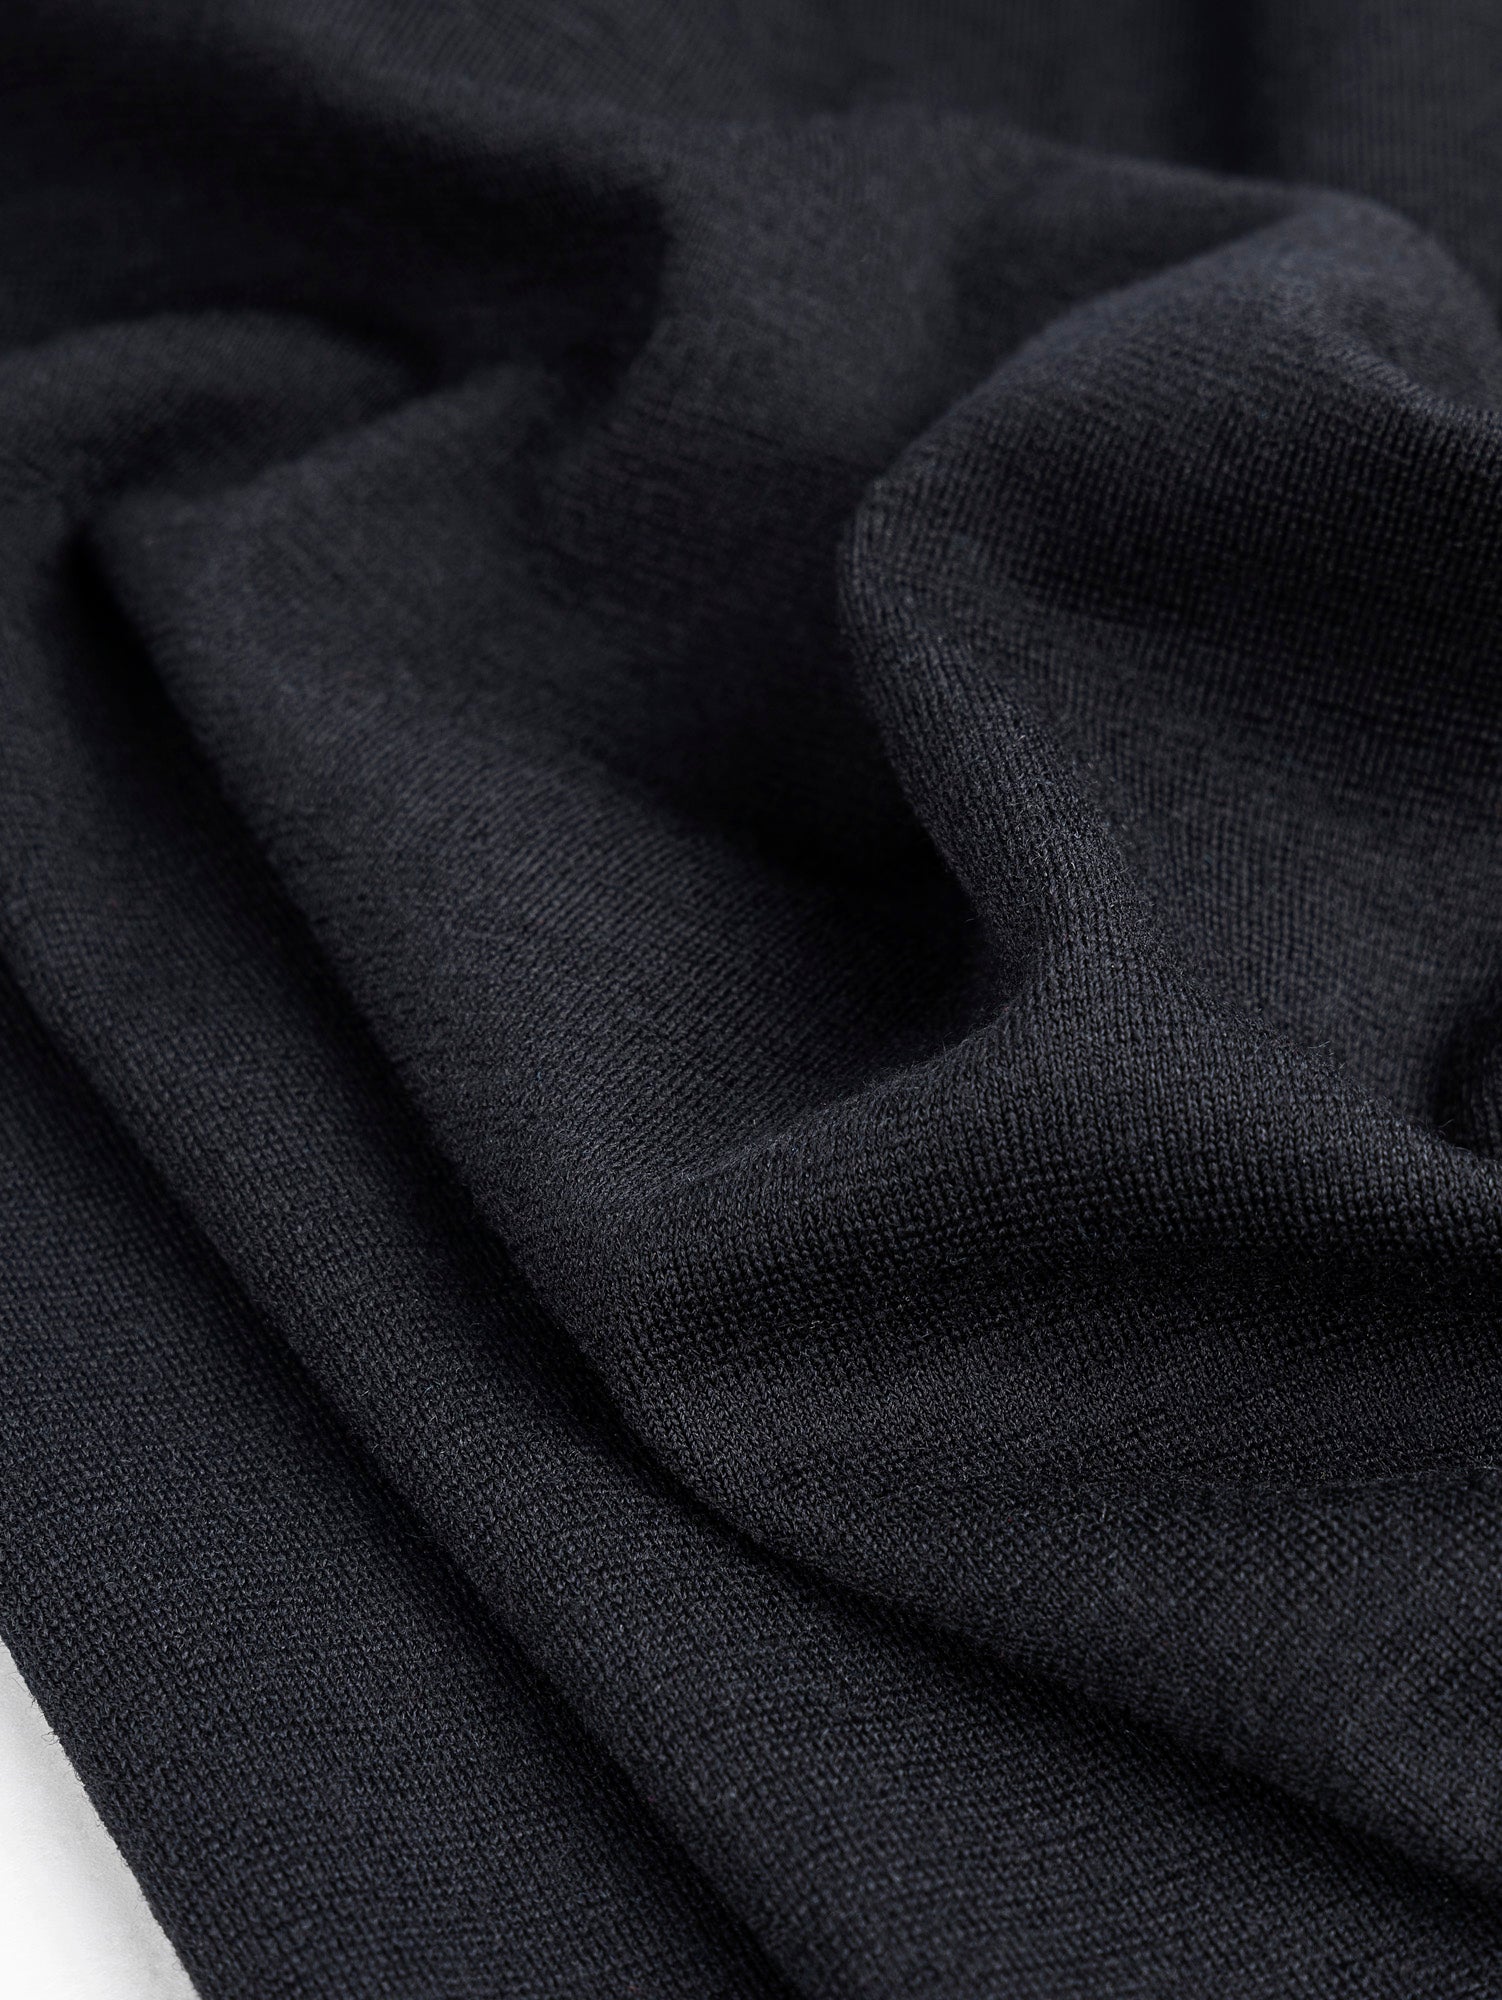 Black Bamboo Merino Wool Stretch French Terry Fabric by Yard